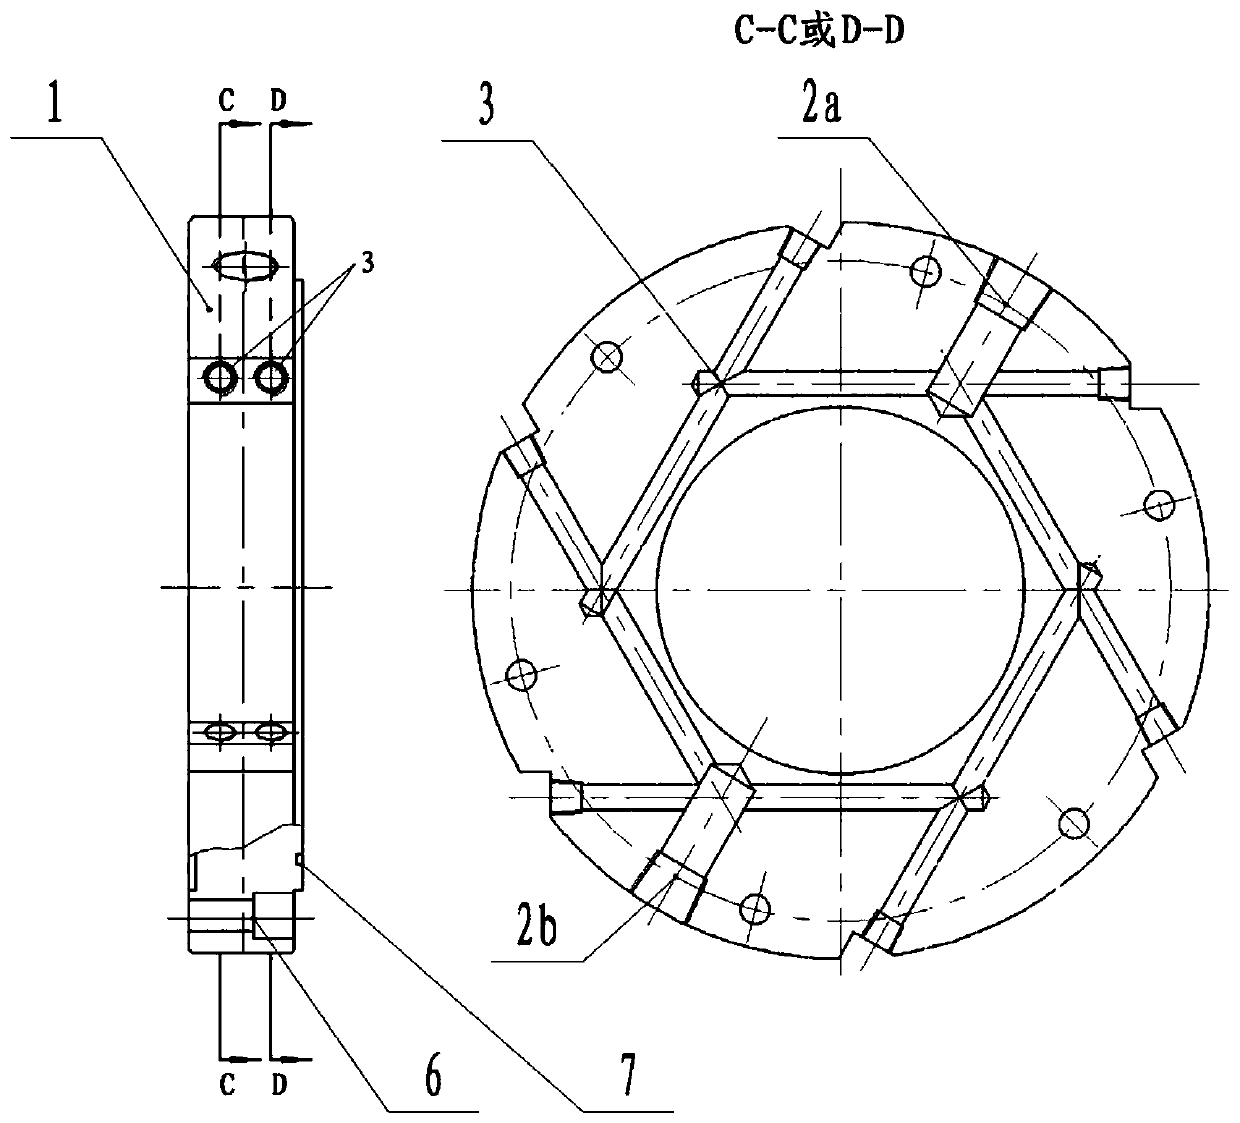 A multi-optical path optical measurement compression sheet for laminated arc heaters